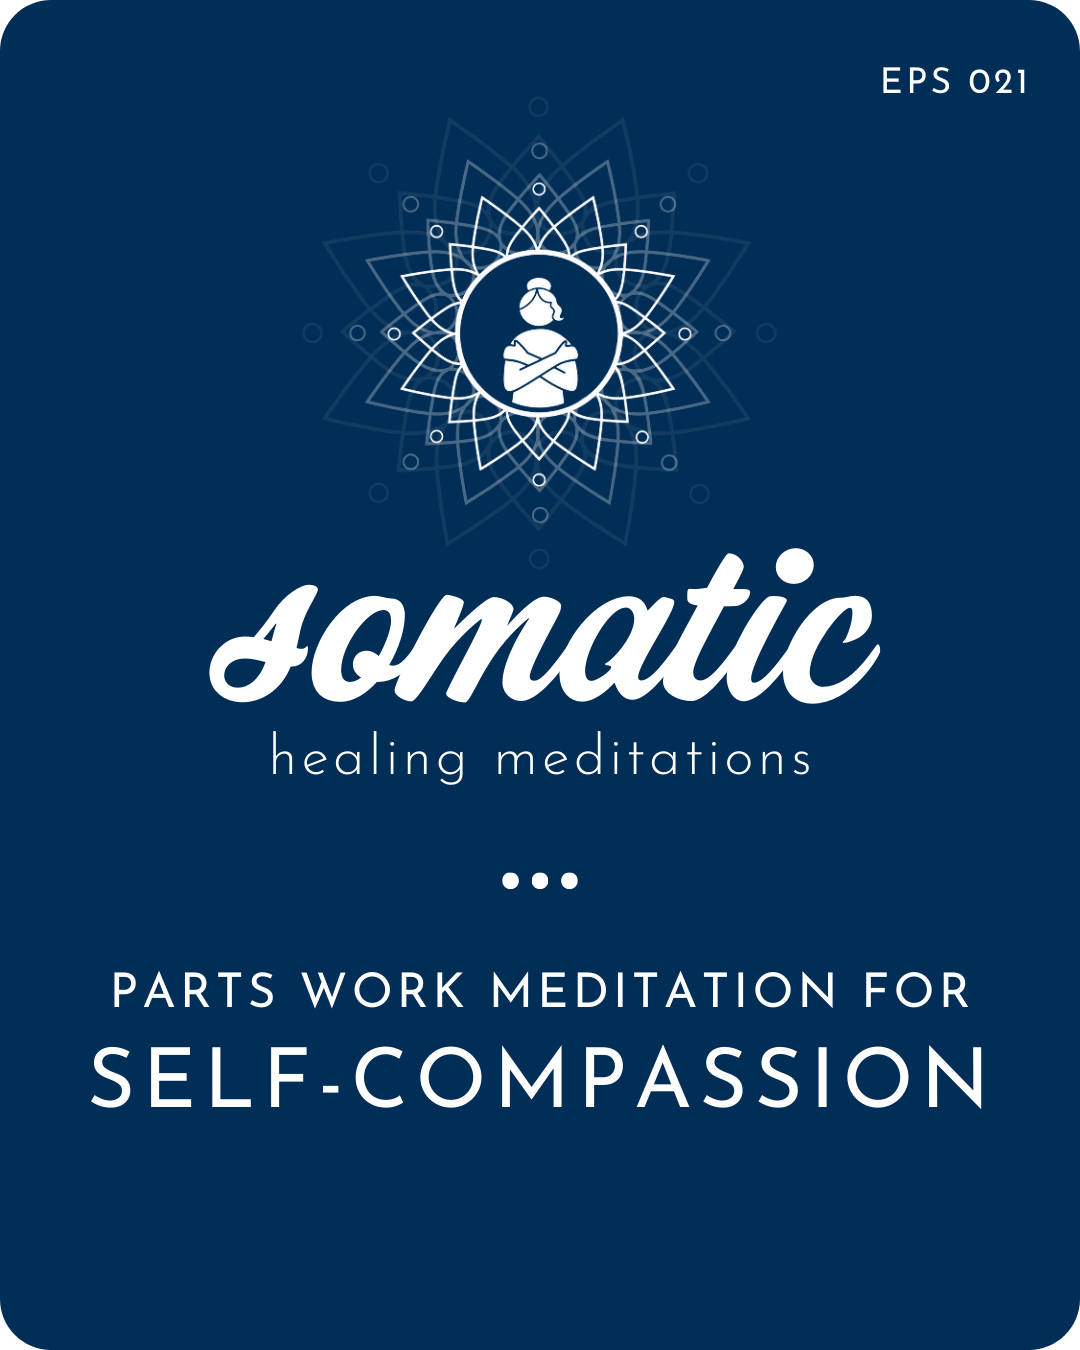 Parts Work Meditation for Self-Compassion